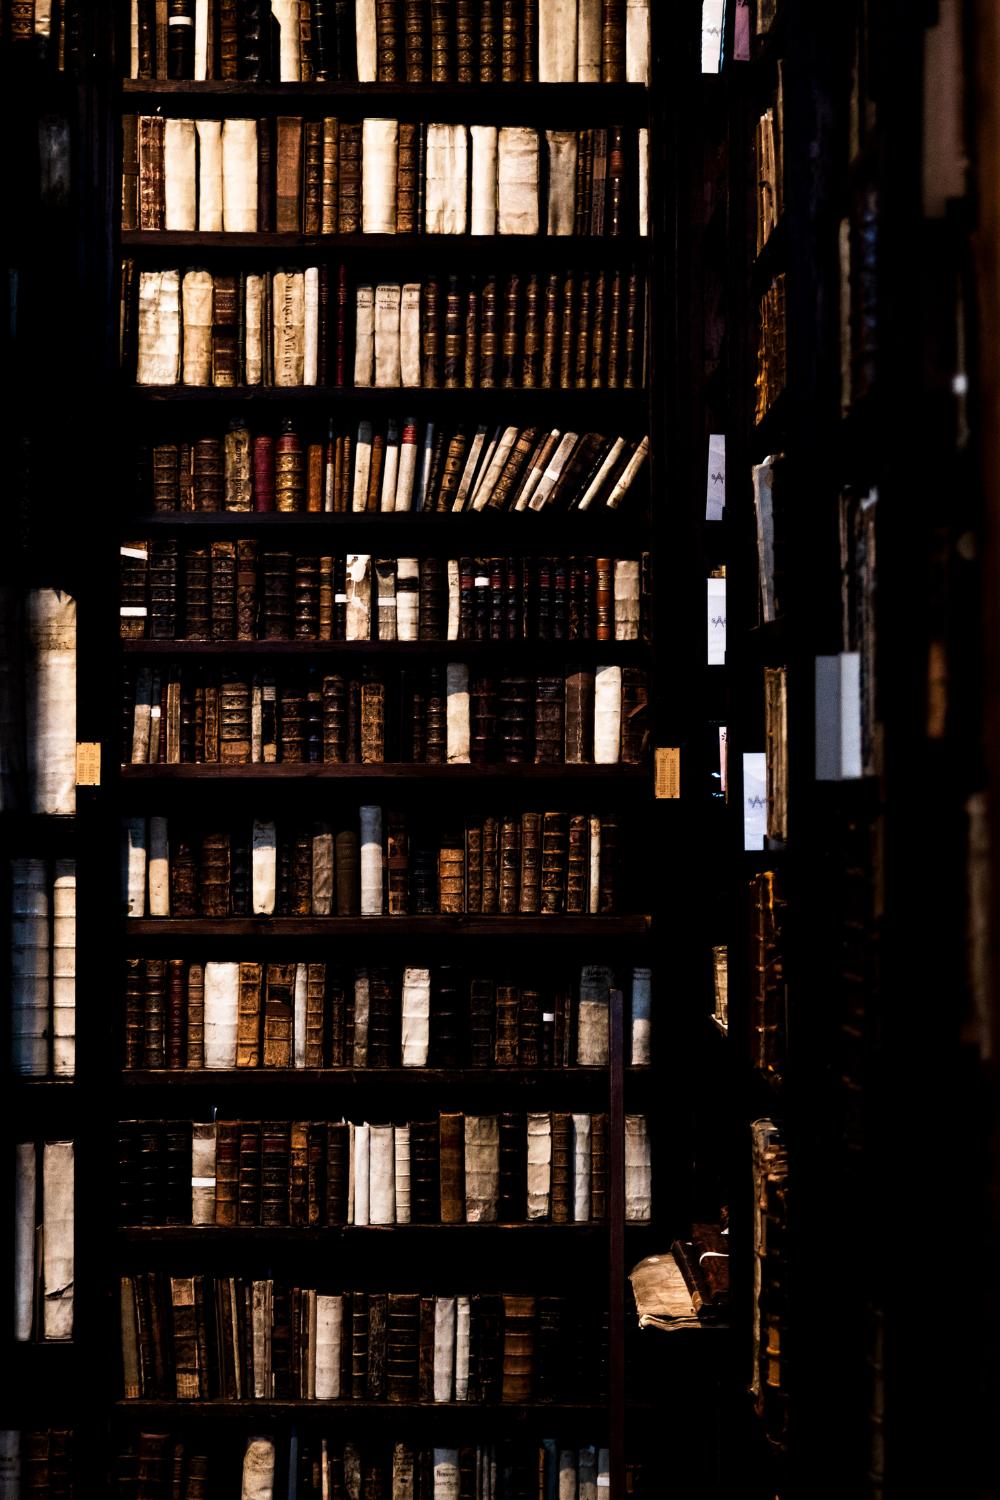 A book shelf with many books on it - Dark academia, bookshelf, library, light academia, architecture